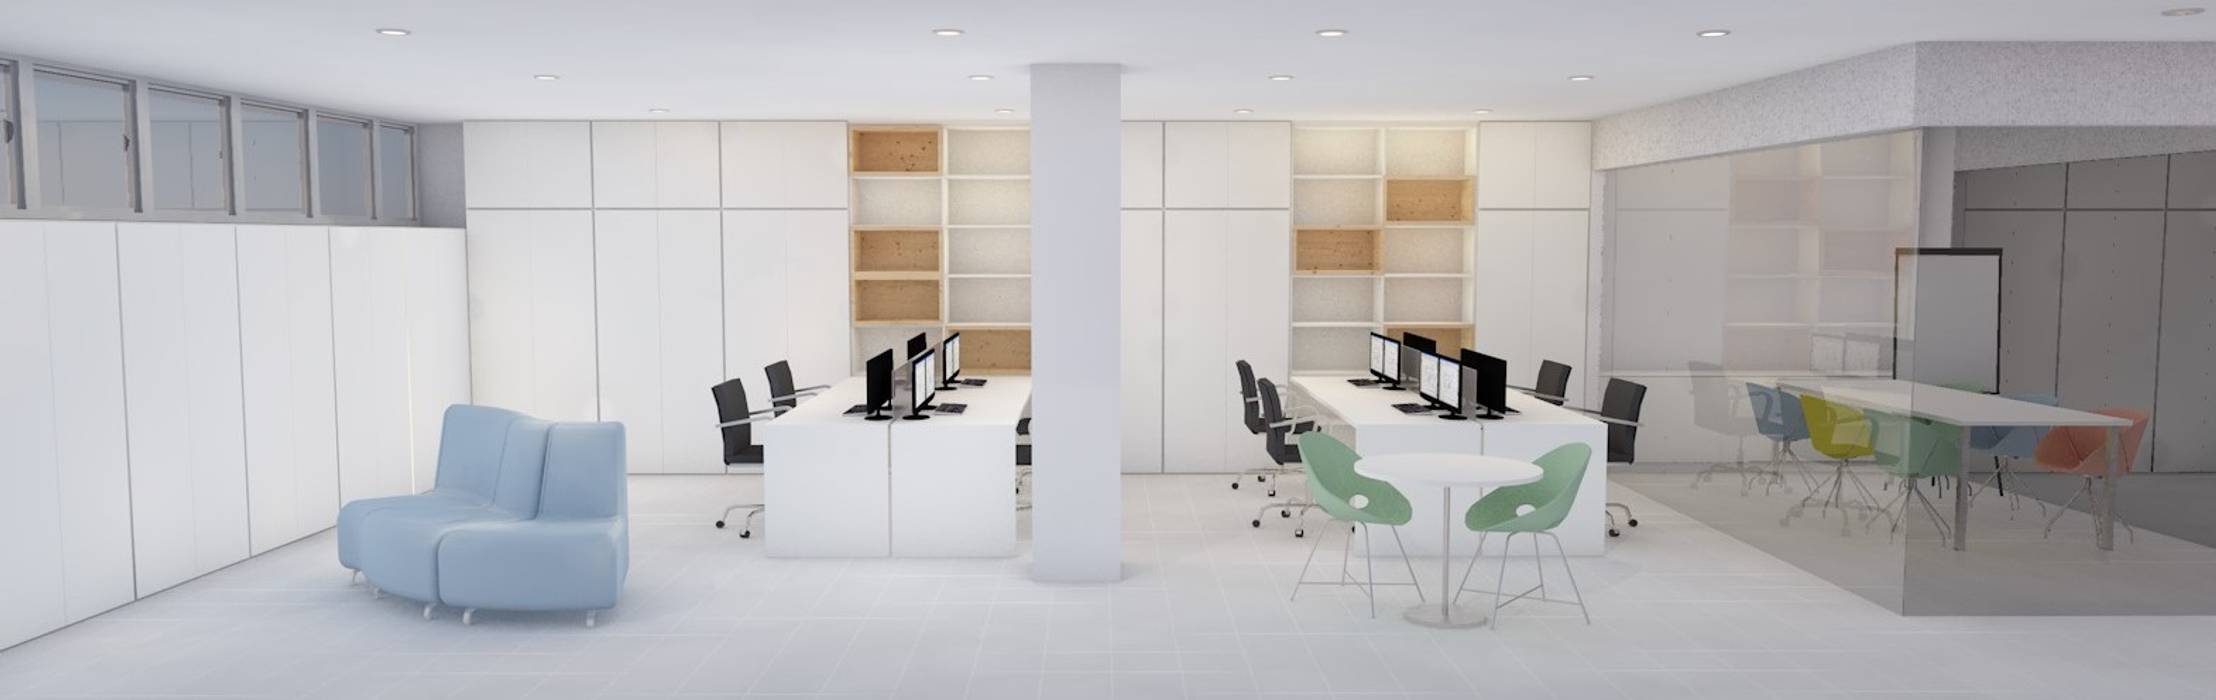 Escritório de contabilidade, IAM Interiores IAM Interiores Commercial spaces Office buildings